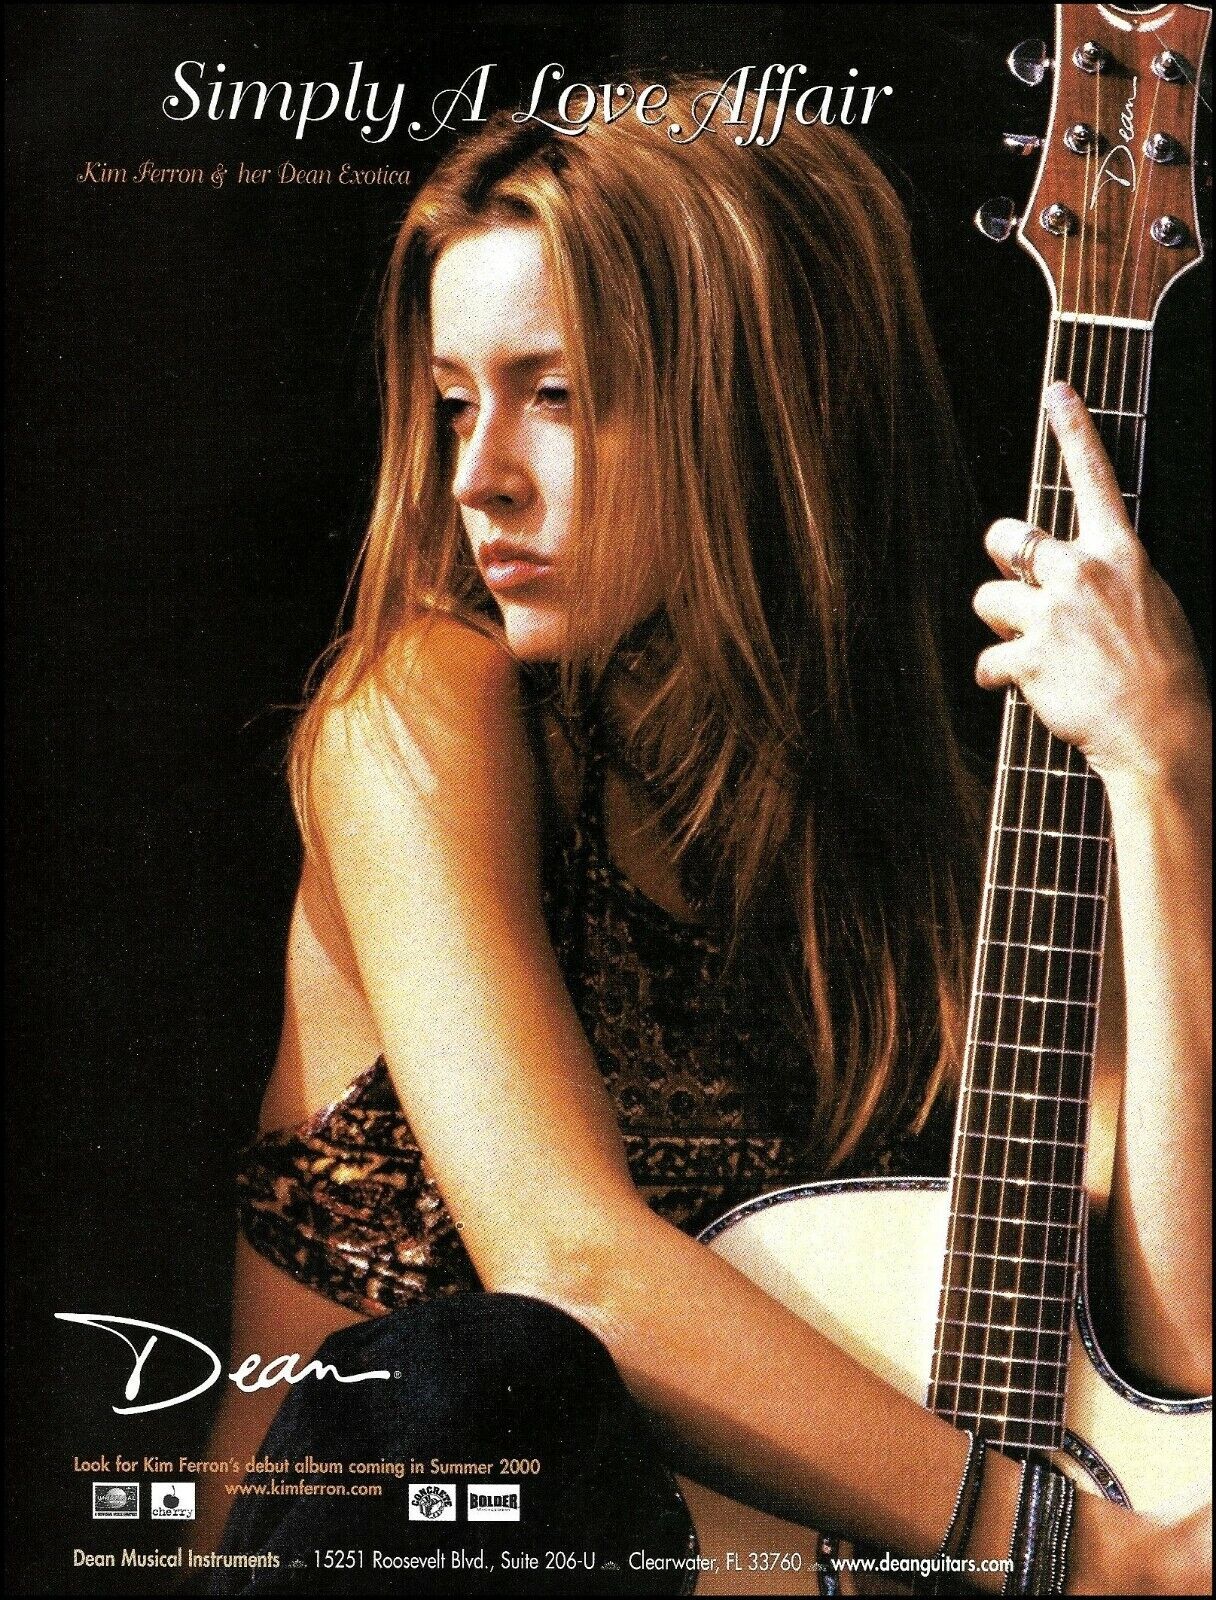 Kim Ferron Dean Exotica Series acoustic guitar advertisement 2000 ad print